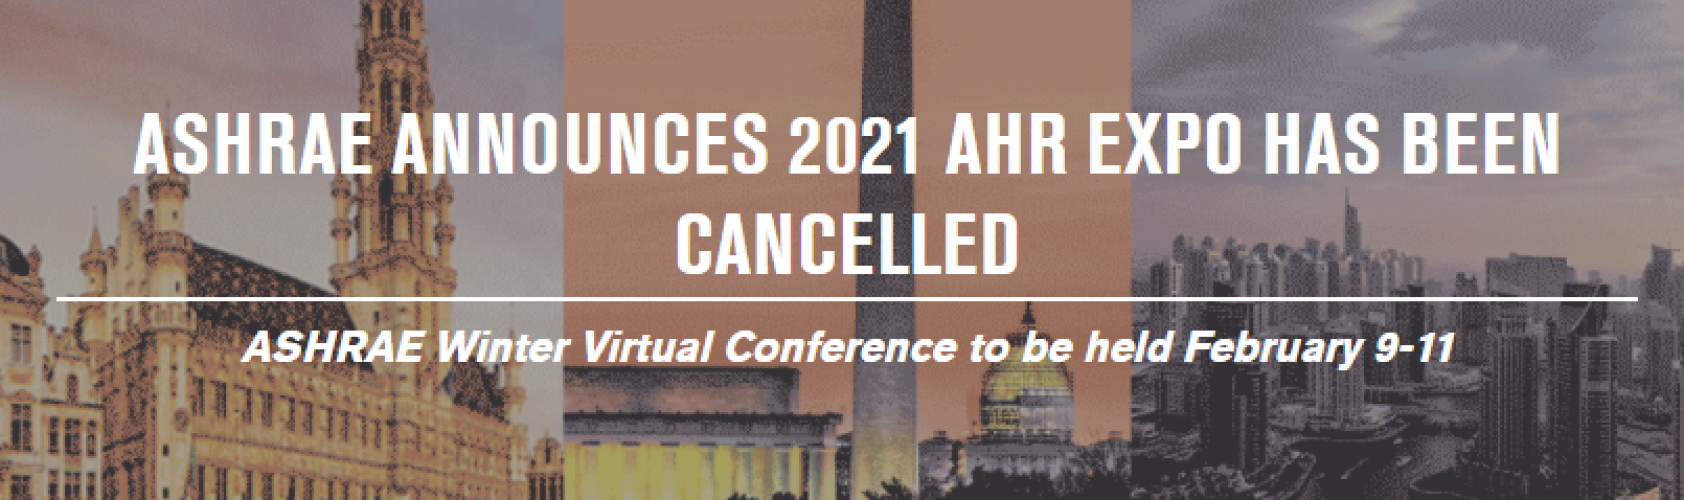 ashrae-announces-2021-ahr-expo-has-been-cancelled